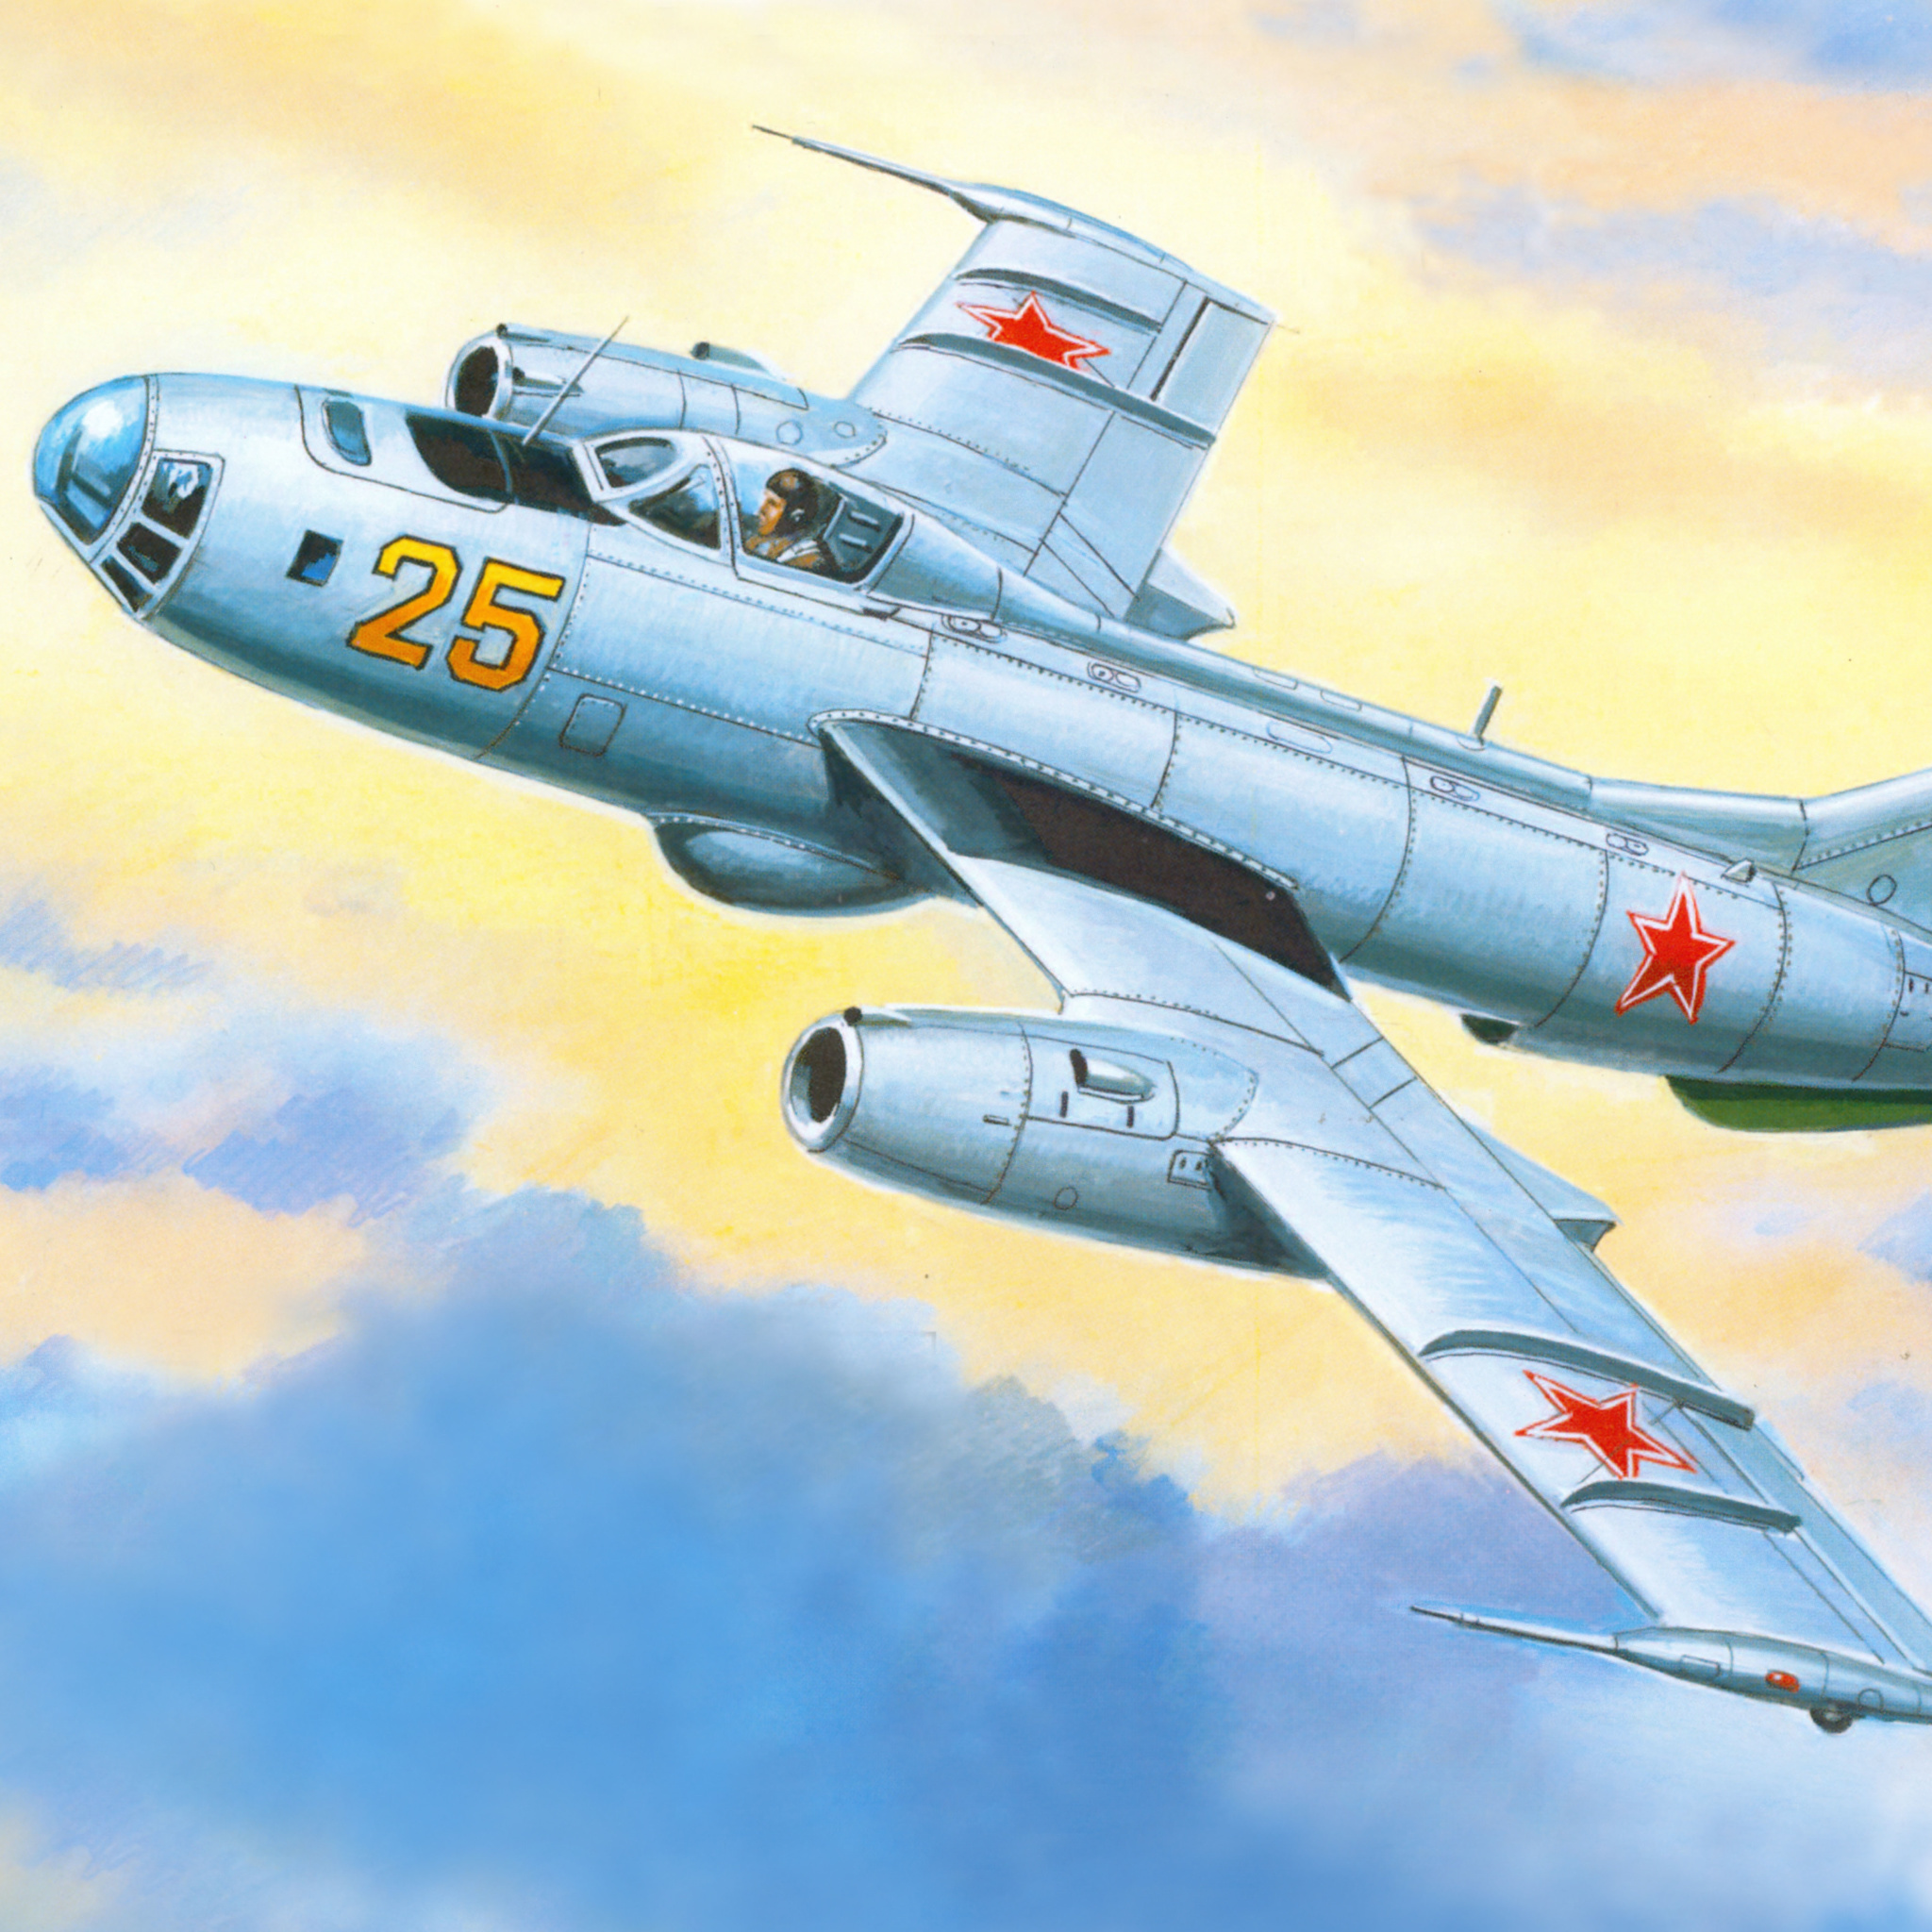 Das Yakovlev Yak 25 Soviet Union interceptor aircraft Wallpaper 2048x2048